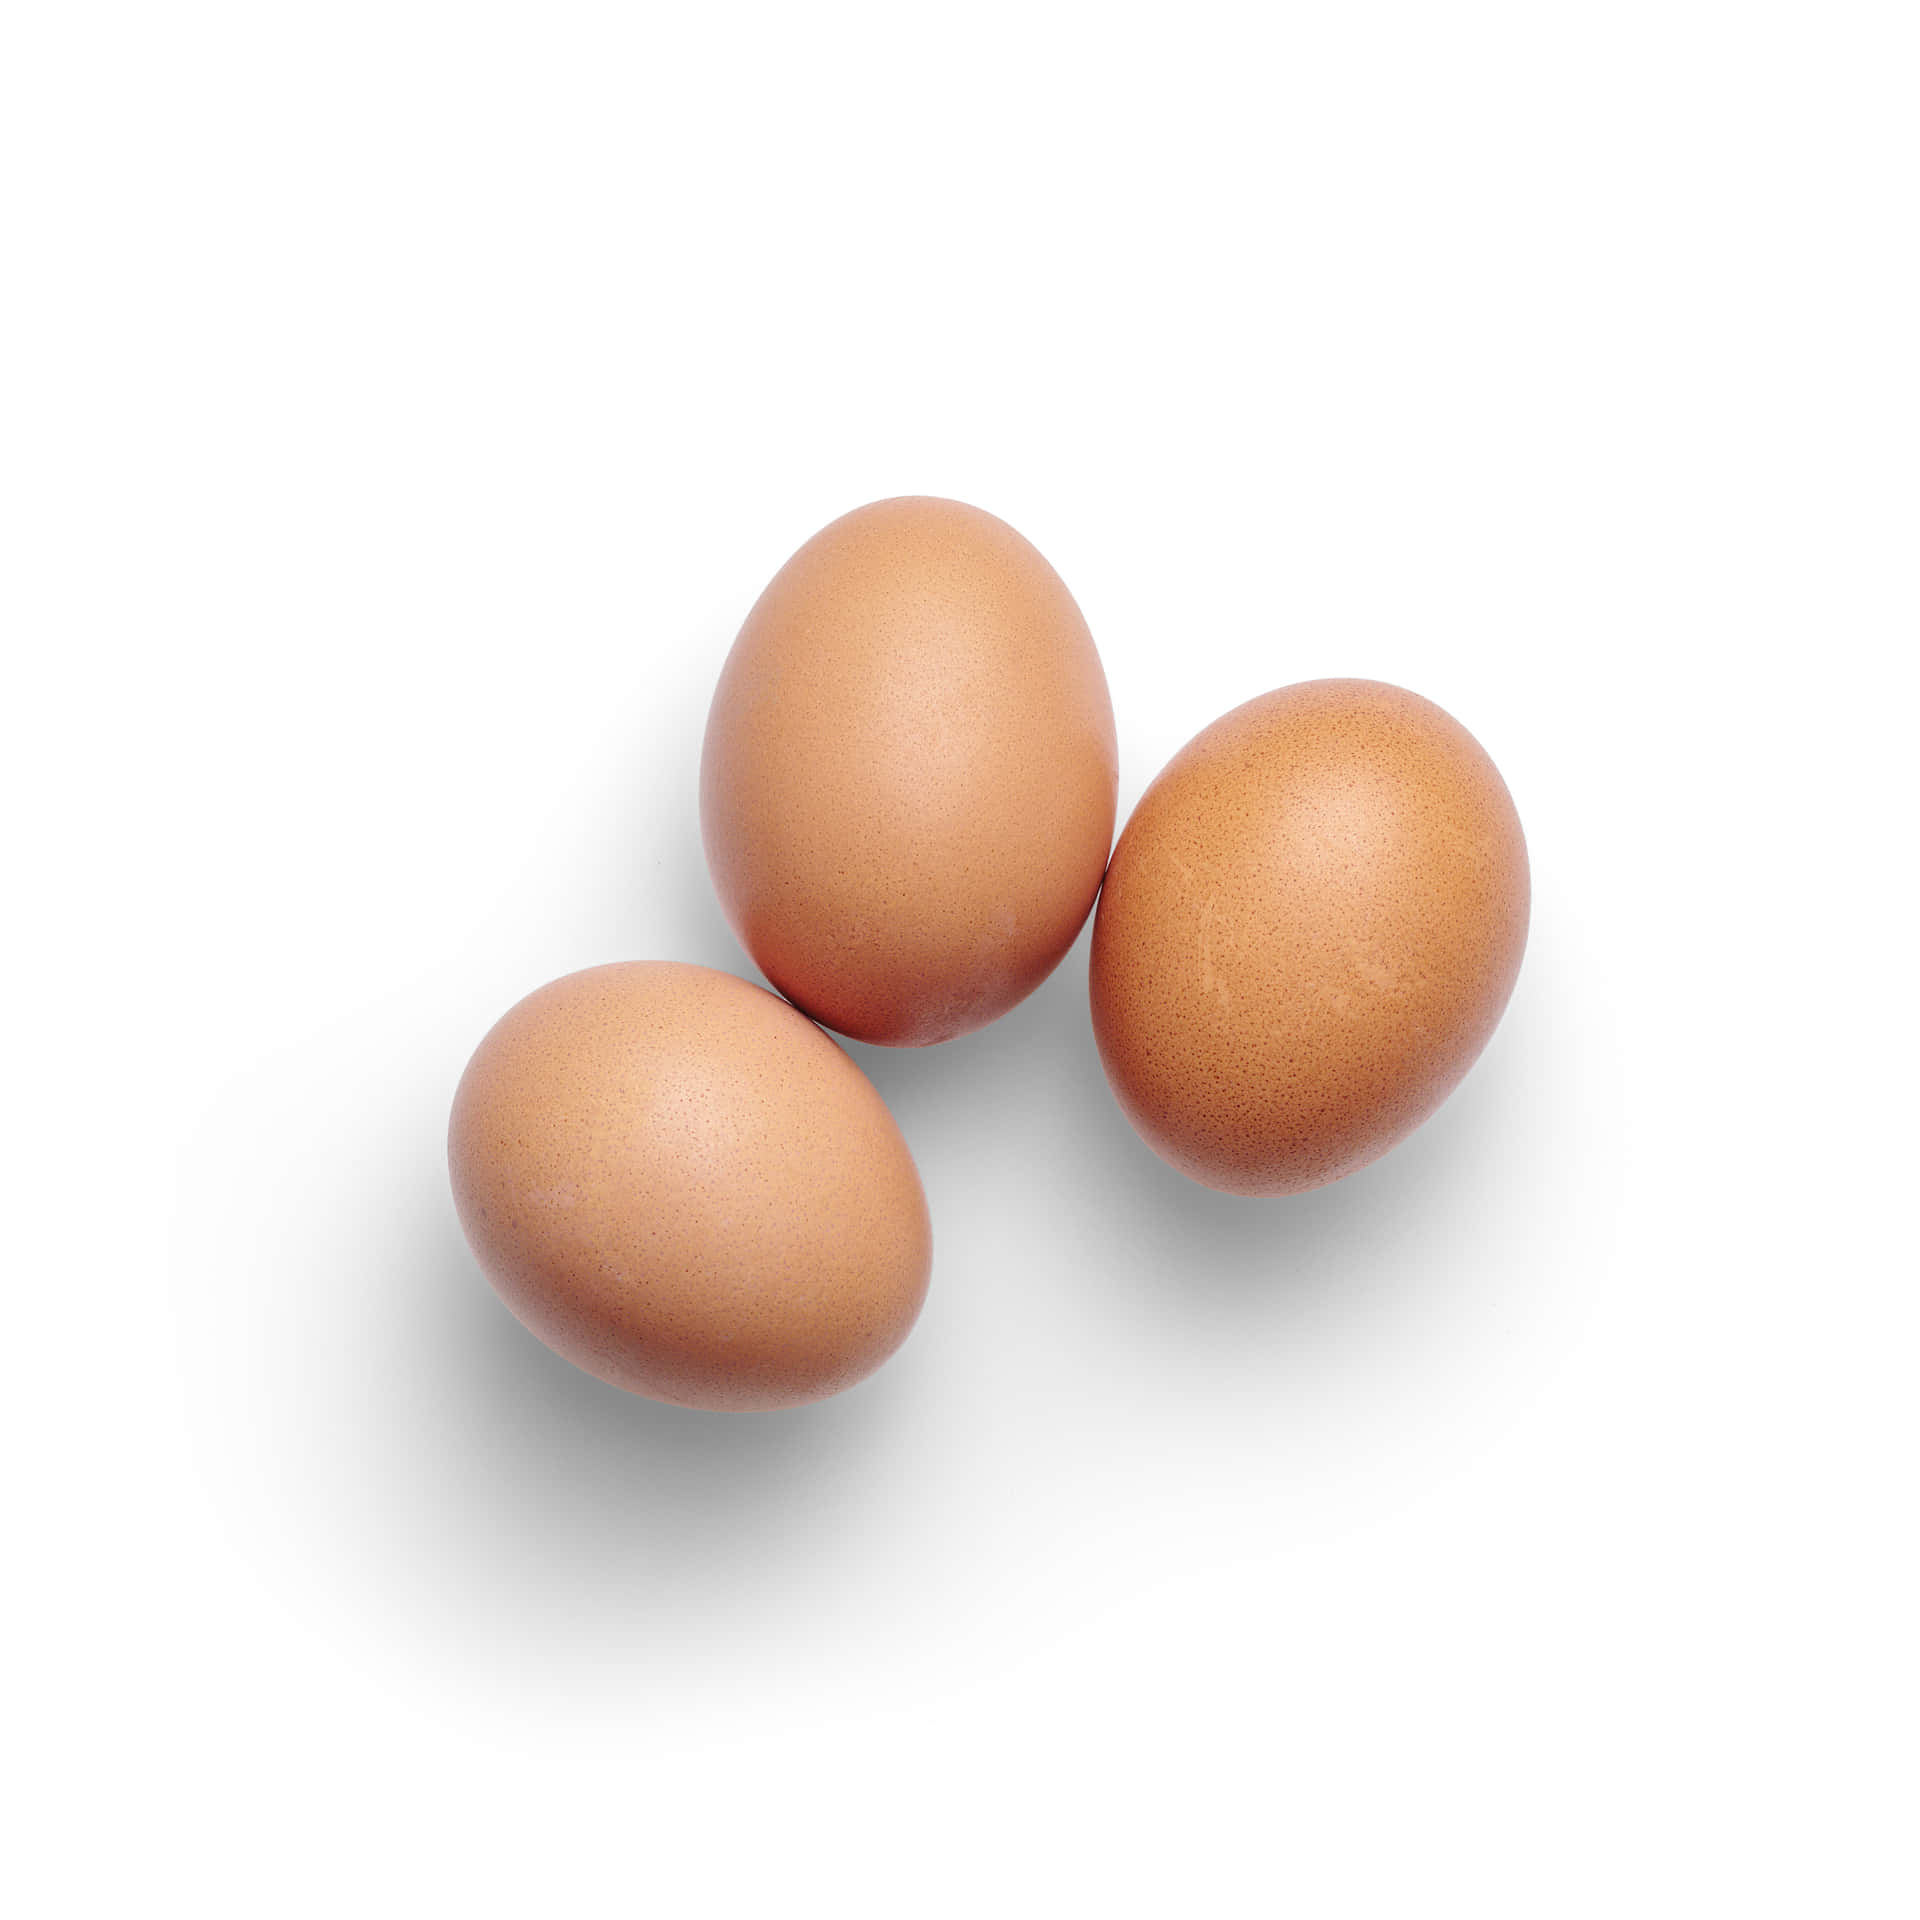 A Dozen Eggs Ready for Preparation